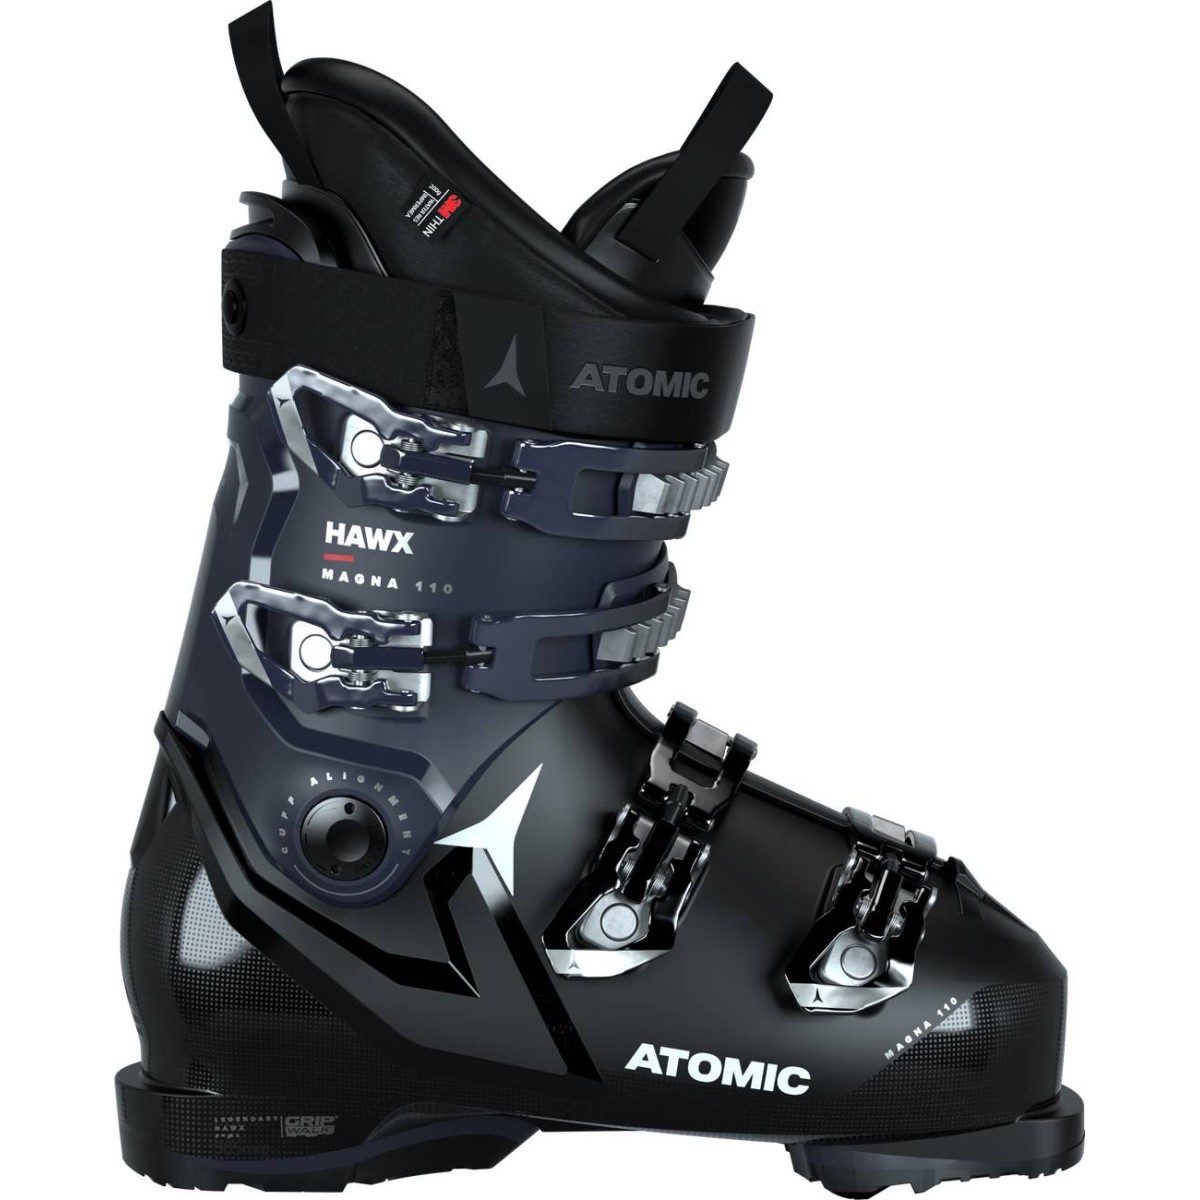 ATOMIC HAWX MAGNA 110 GW alpine ski boots - black/dark blue